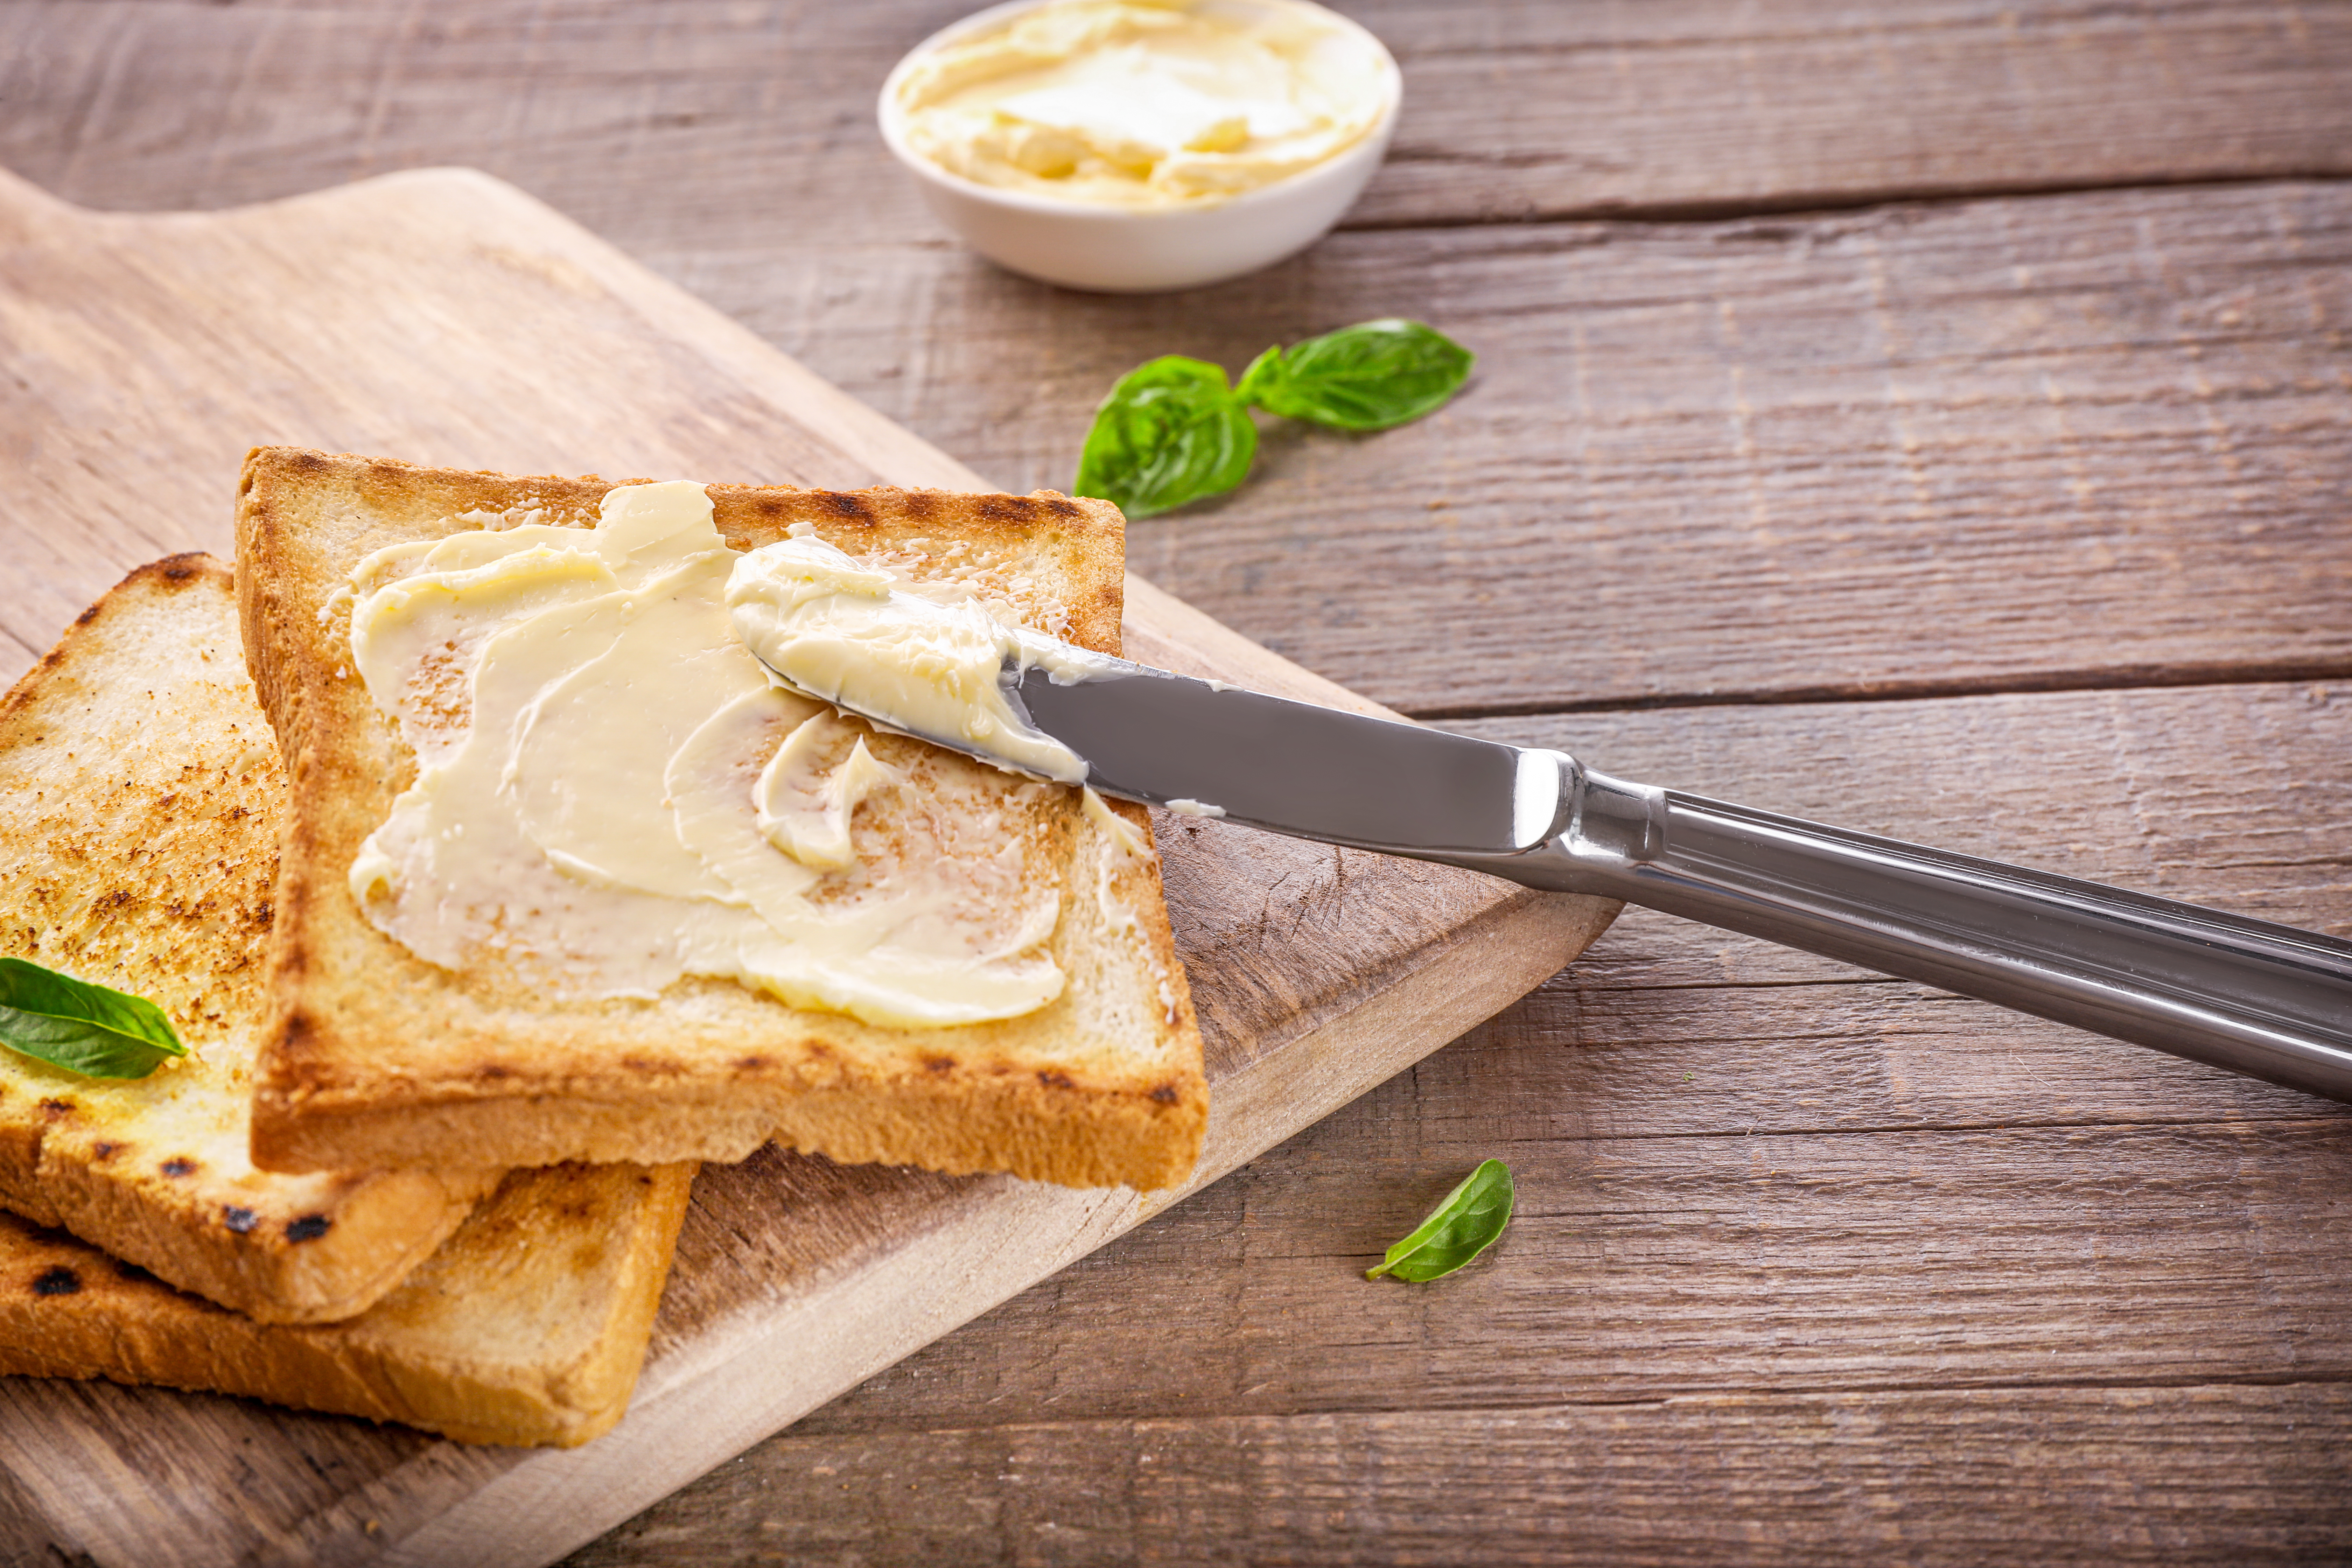 Toast spread with margarine | Source: Shutterstock